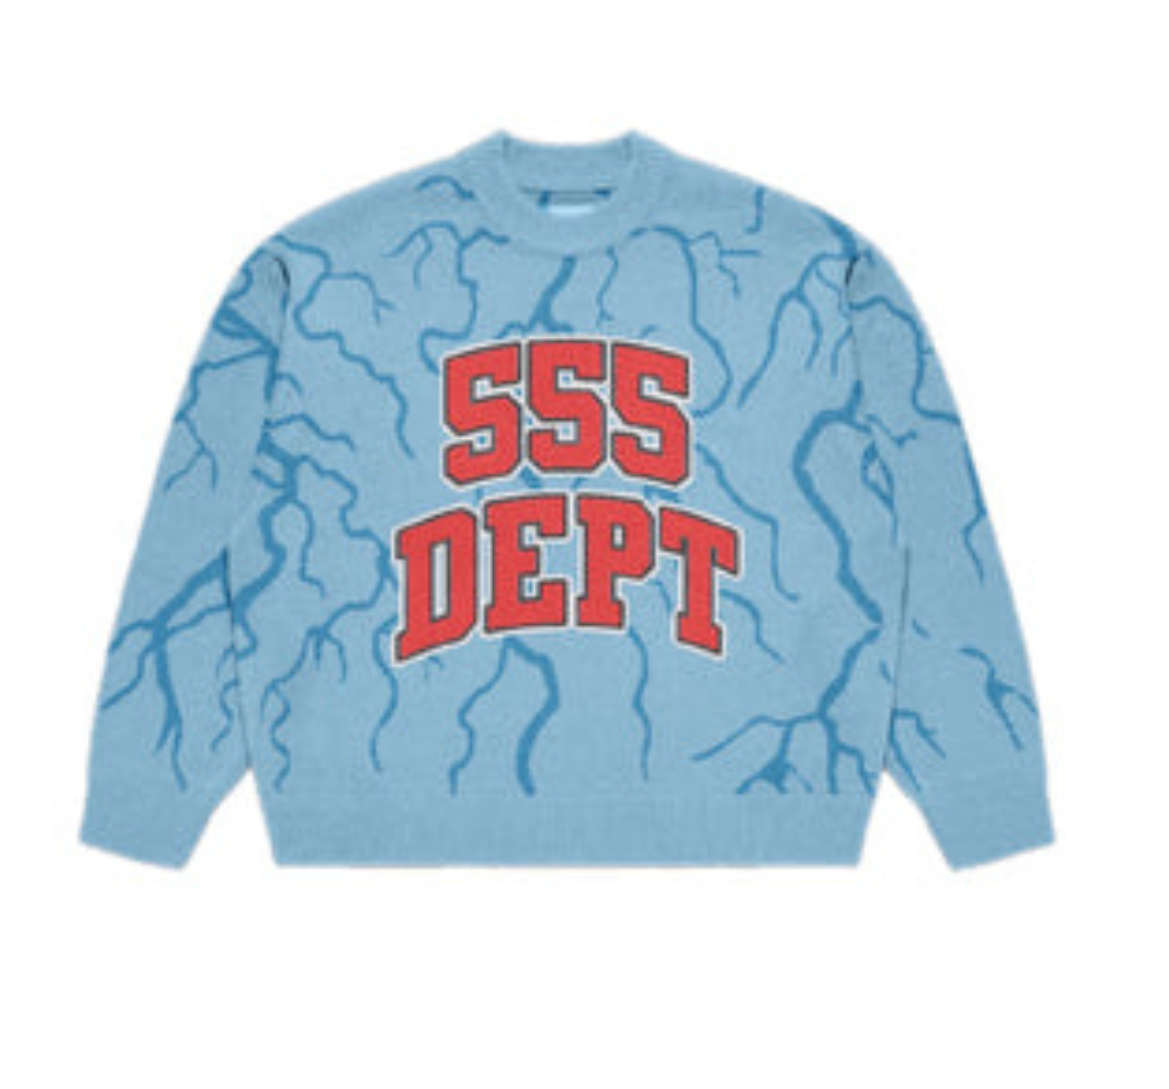 555 Dept Sweaters